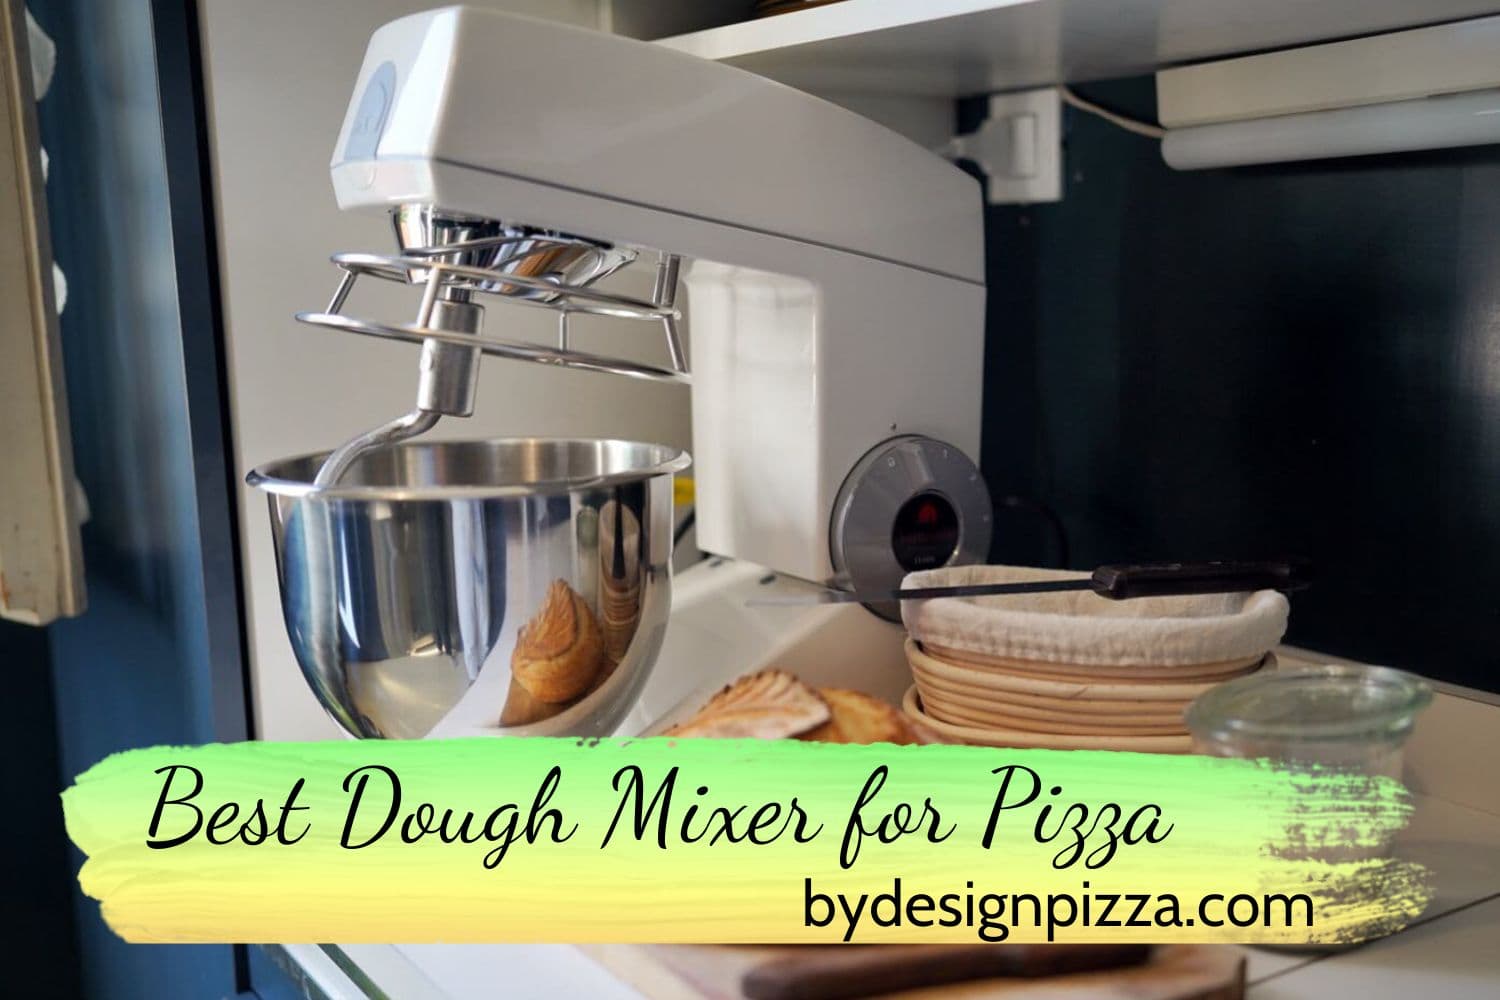 Best Dough Mixer for Pizza